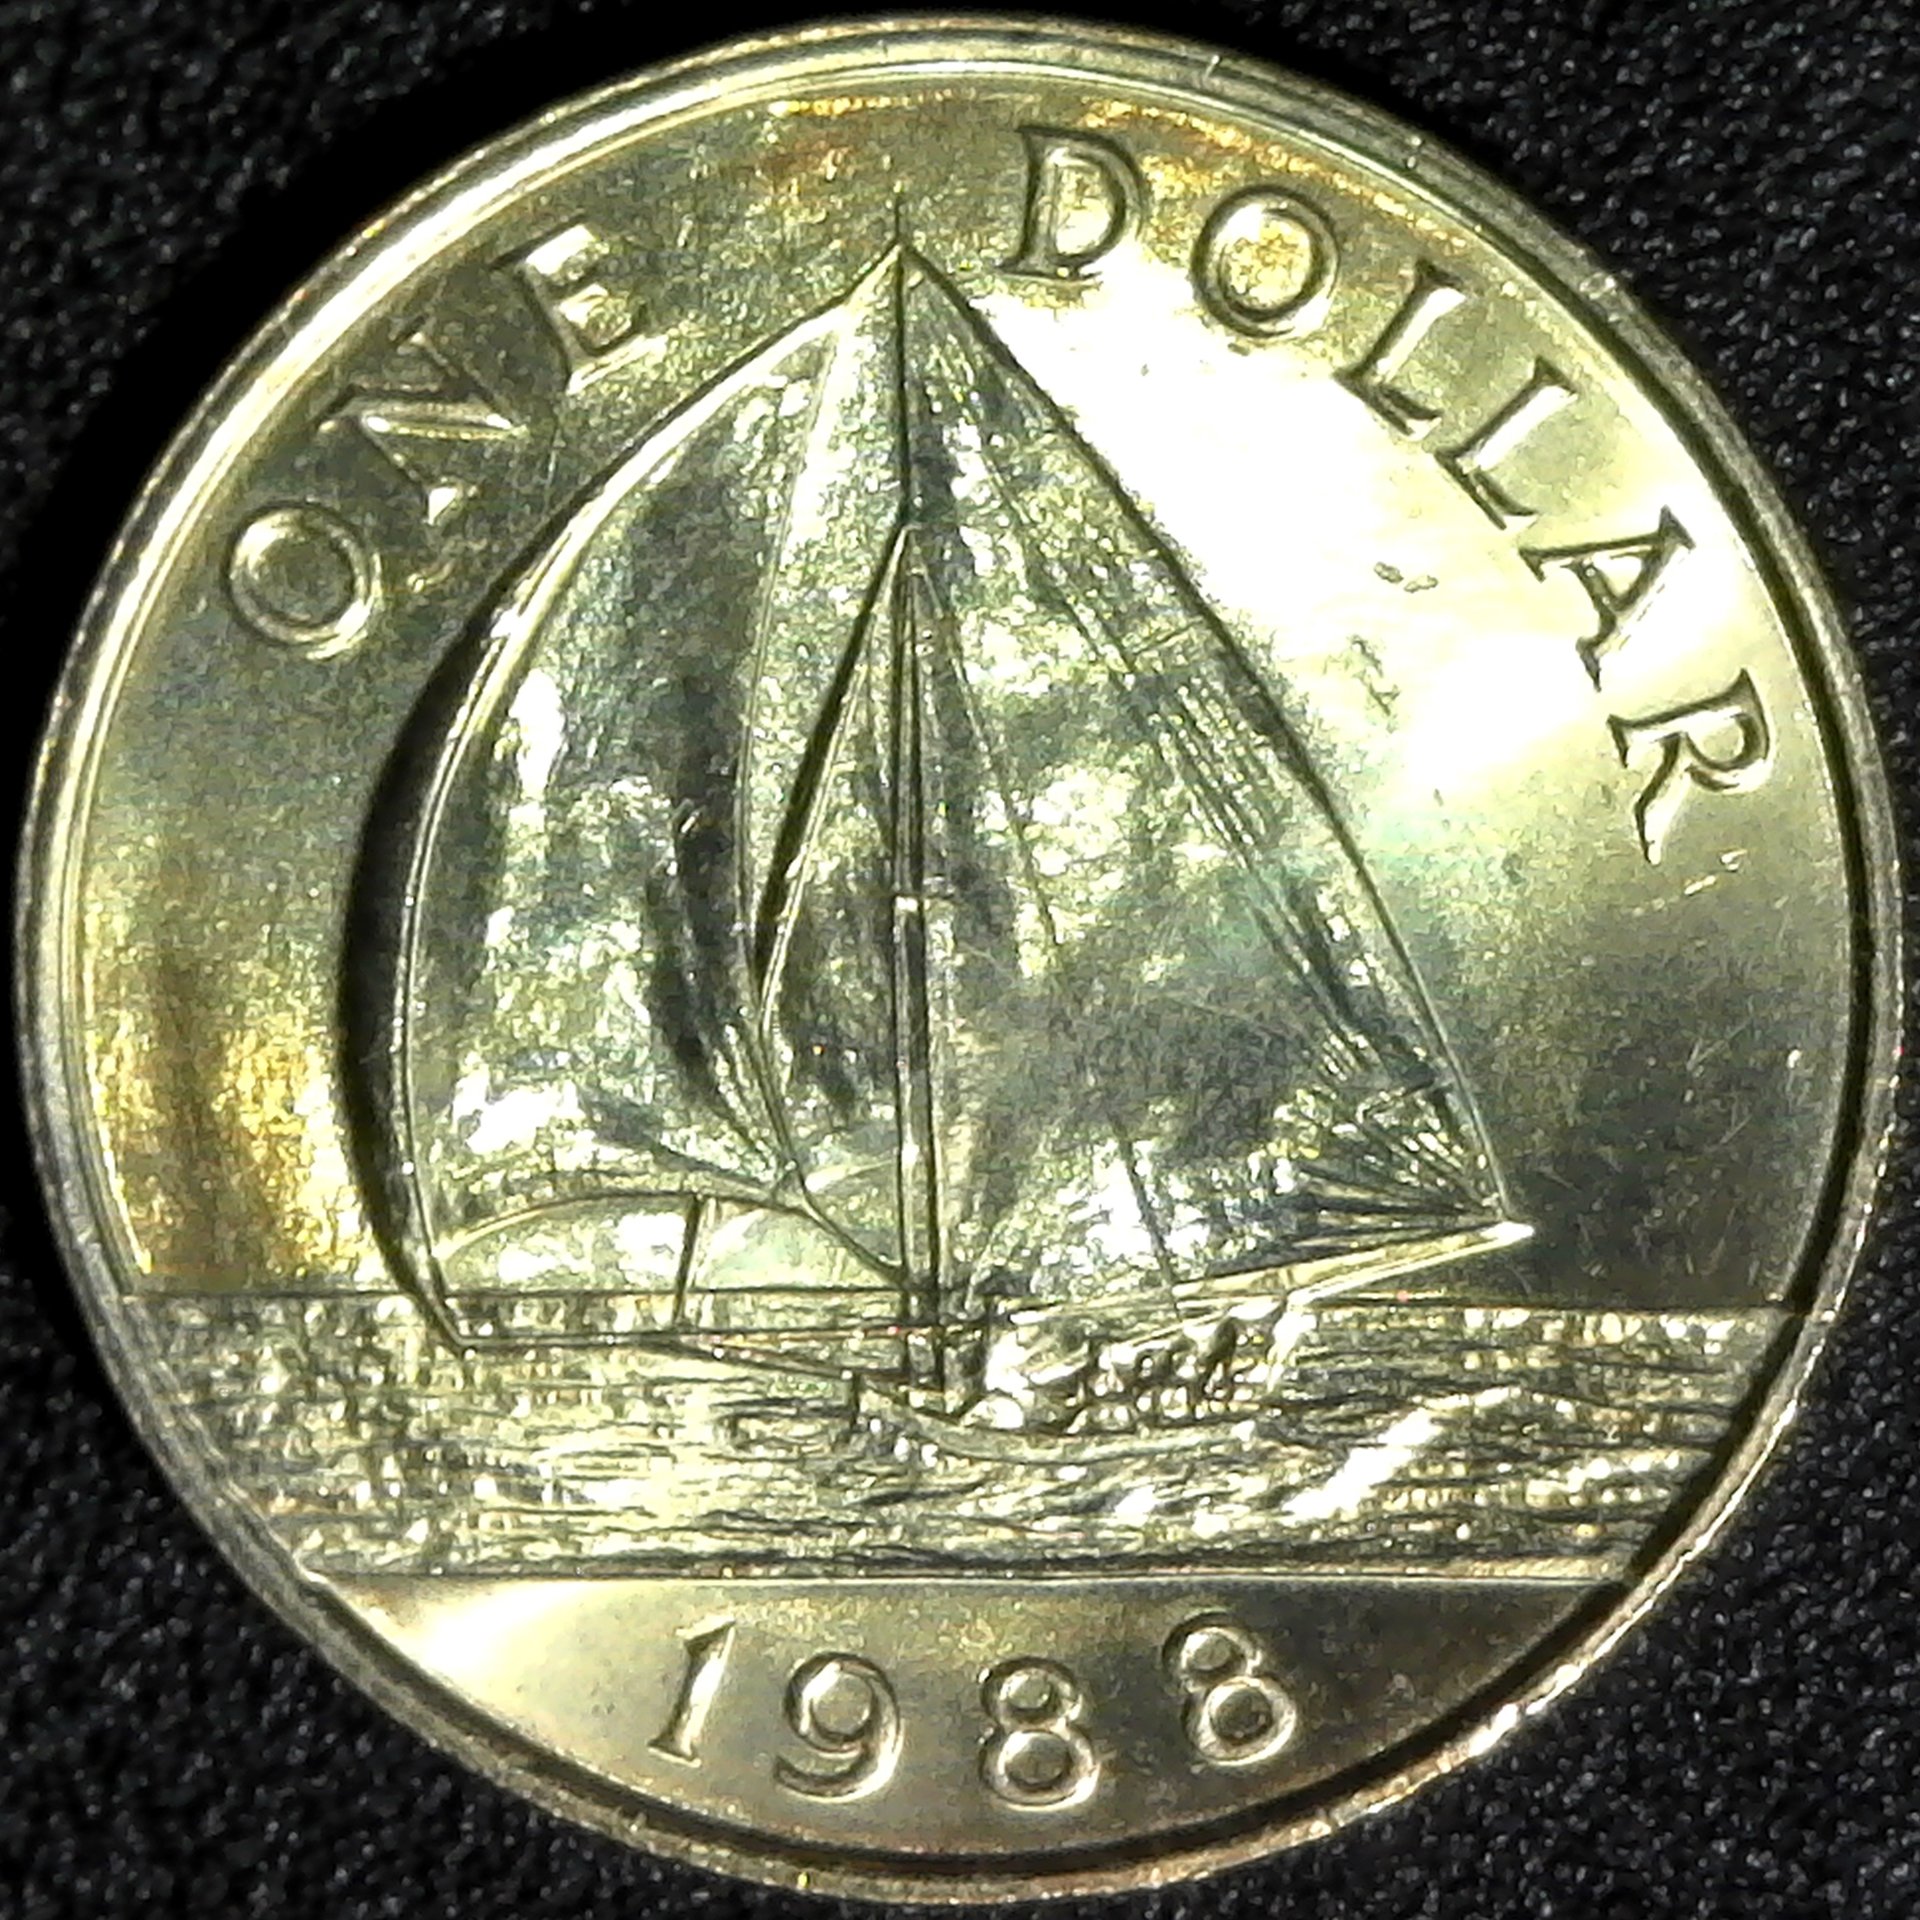 Bermuda One Dollar 1988 rev.jpg